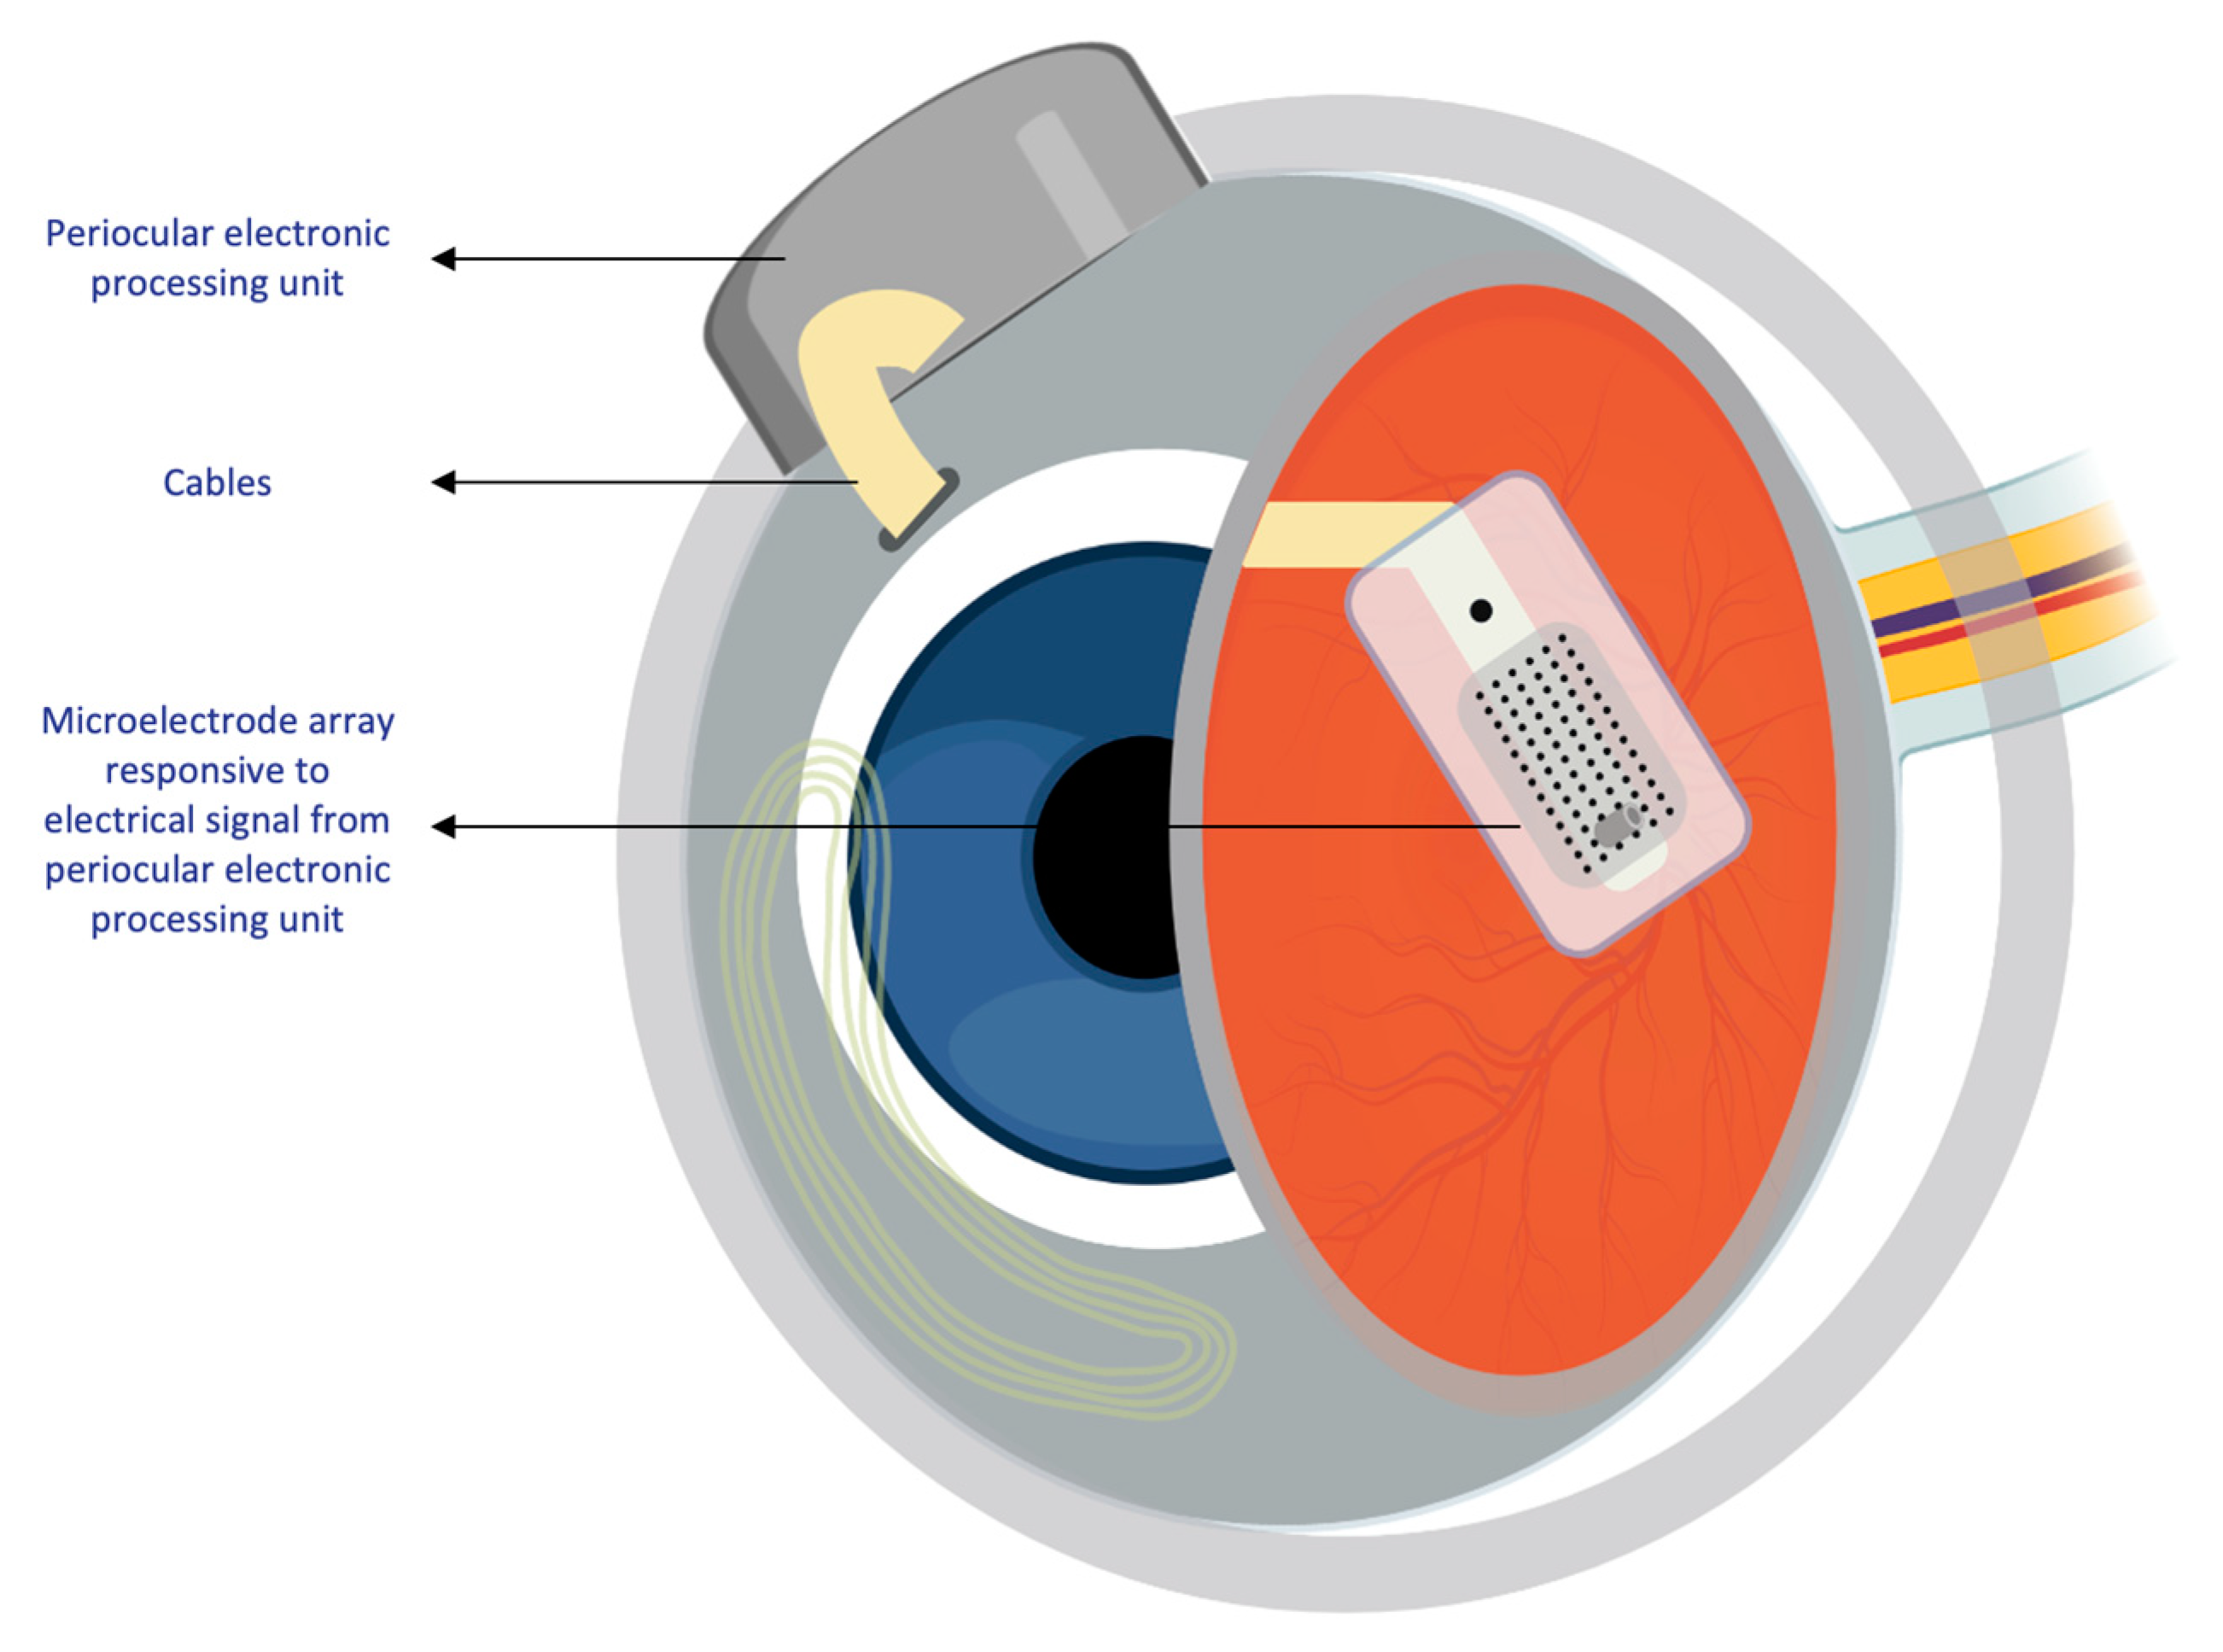 Prosthetic Eye (Artificial eye) - Aravind Eye Care System